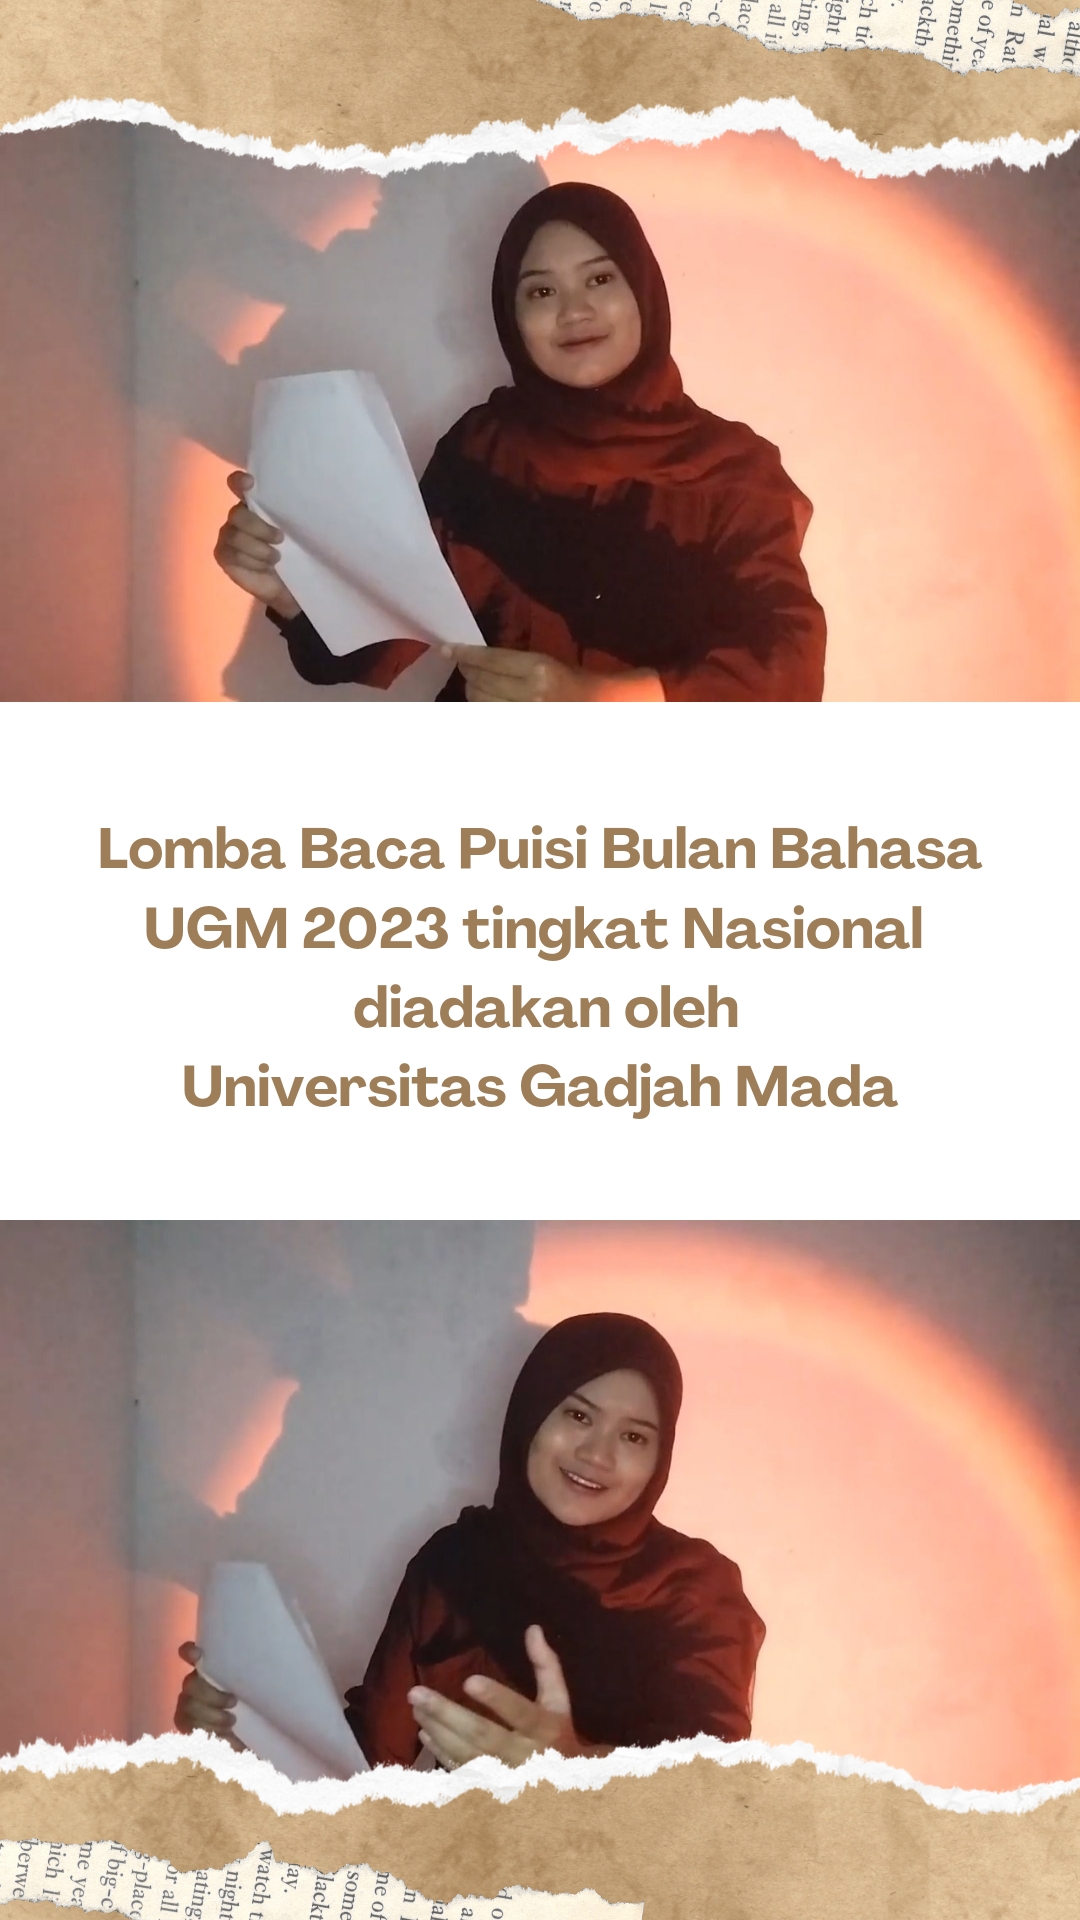 Foto Lomba Baca Puisi Bulan Bahasa Universitas Gajah Mada 2023